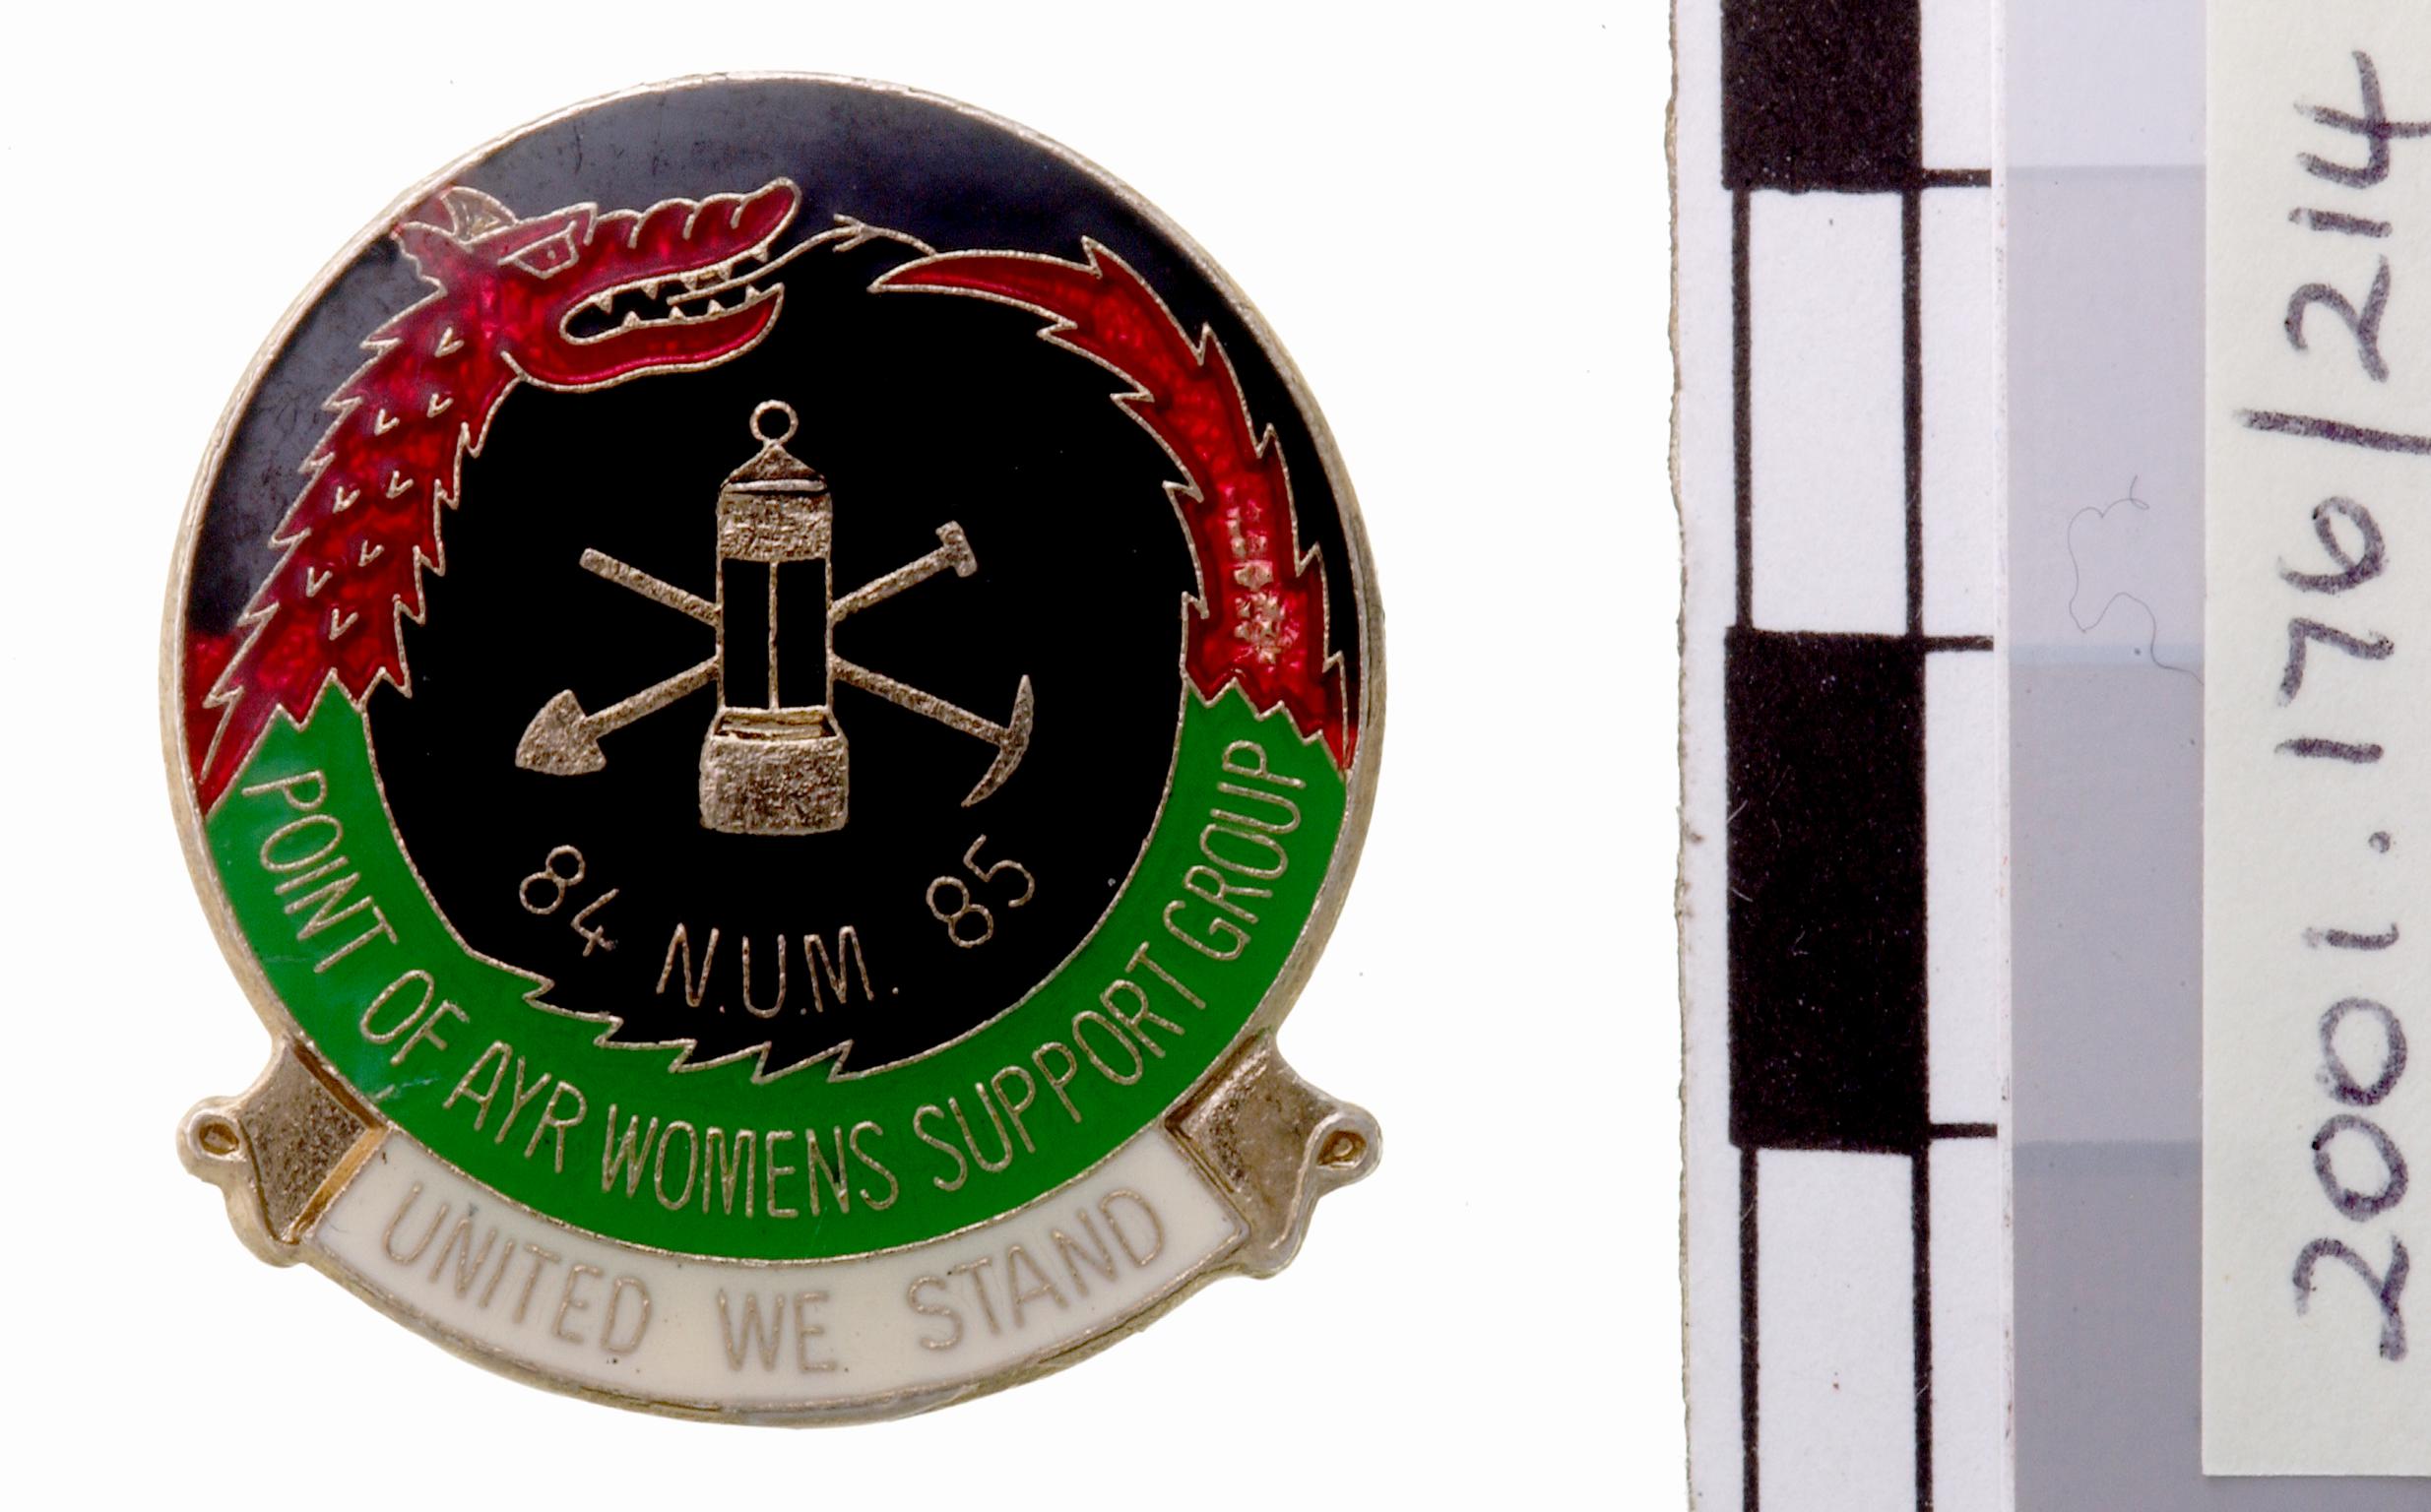 N.U.M. North Wales Area, badge